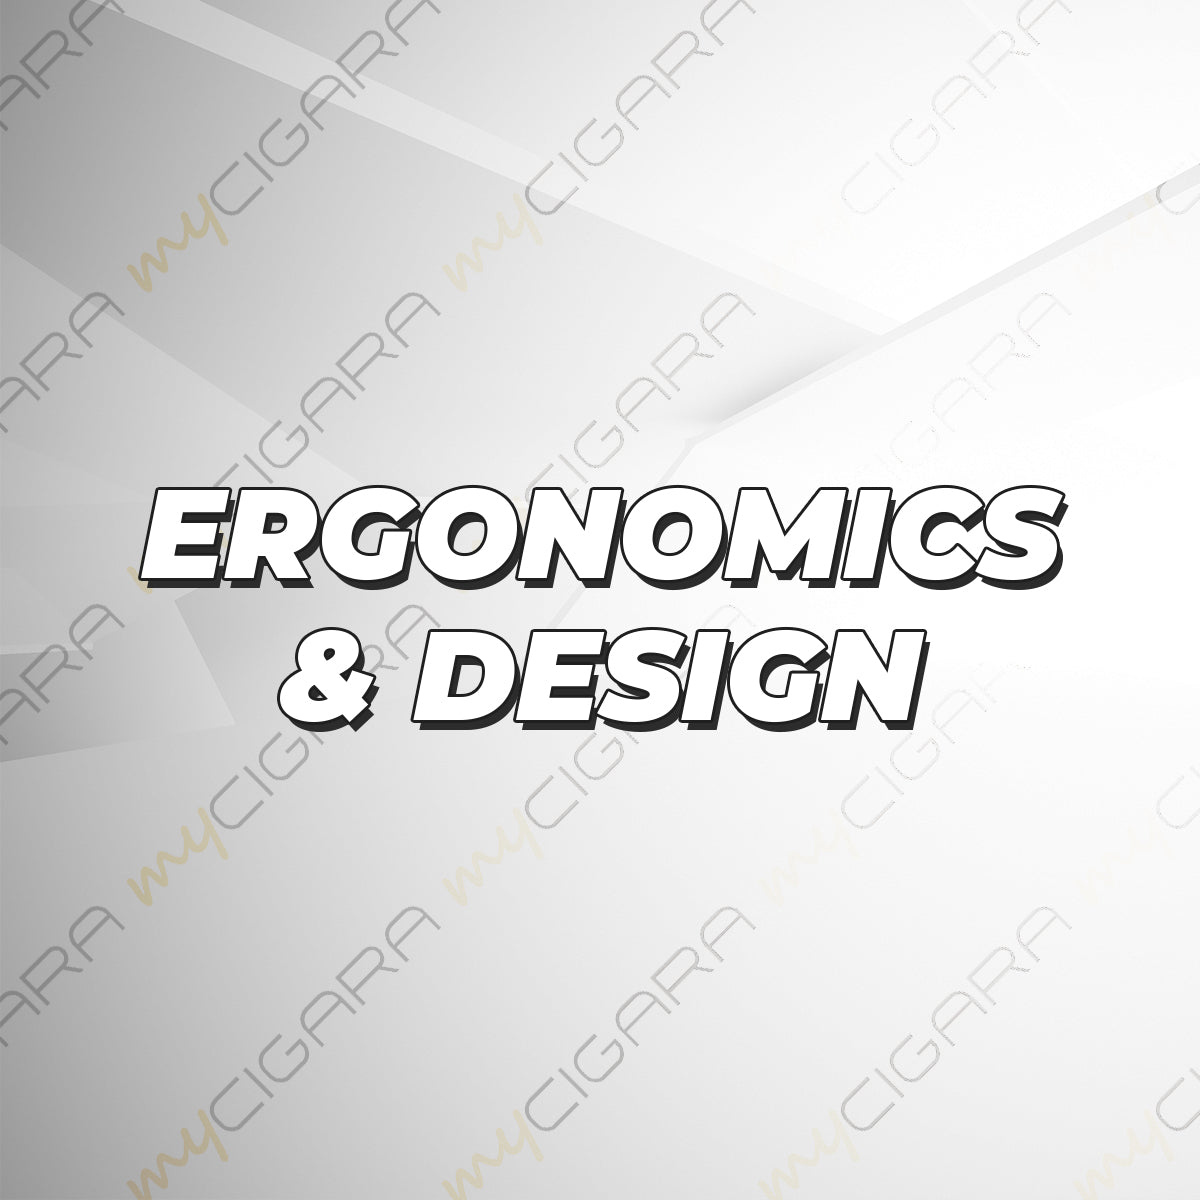 Vuse ePod 2 Ergonomics & Design